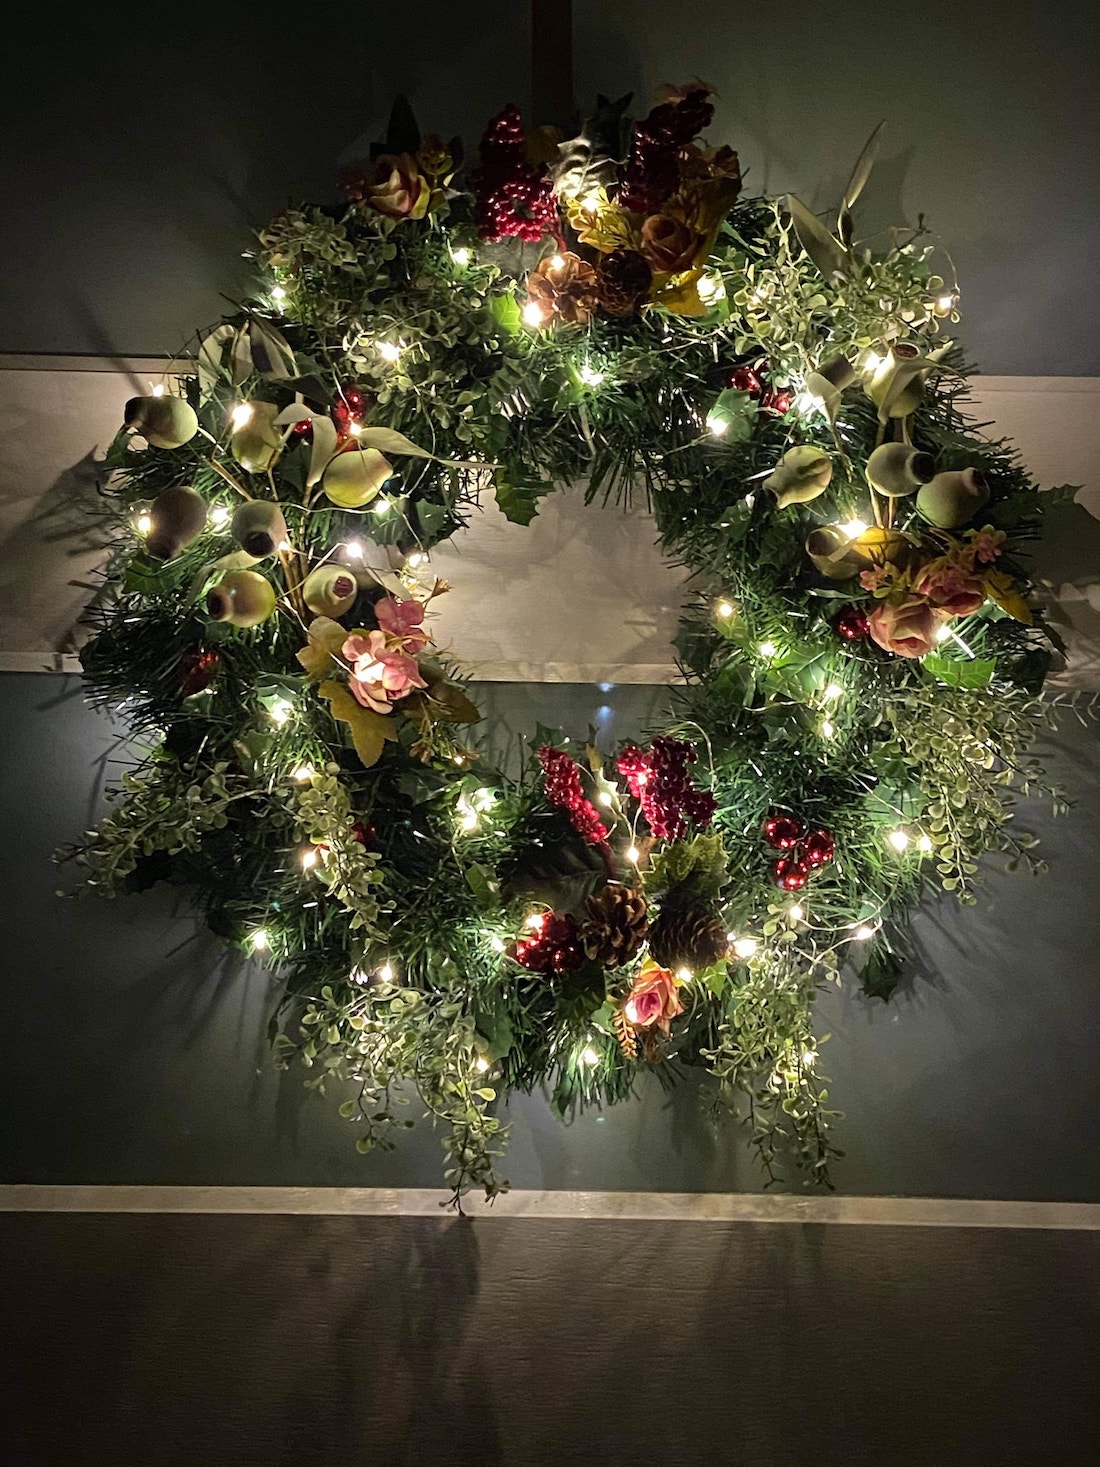 Christmas wreath at night